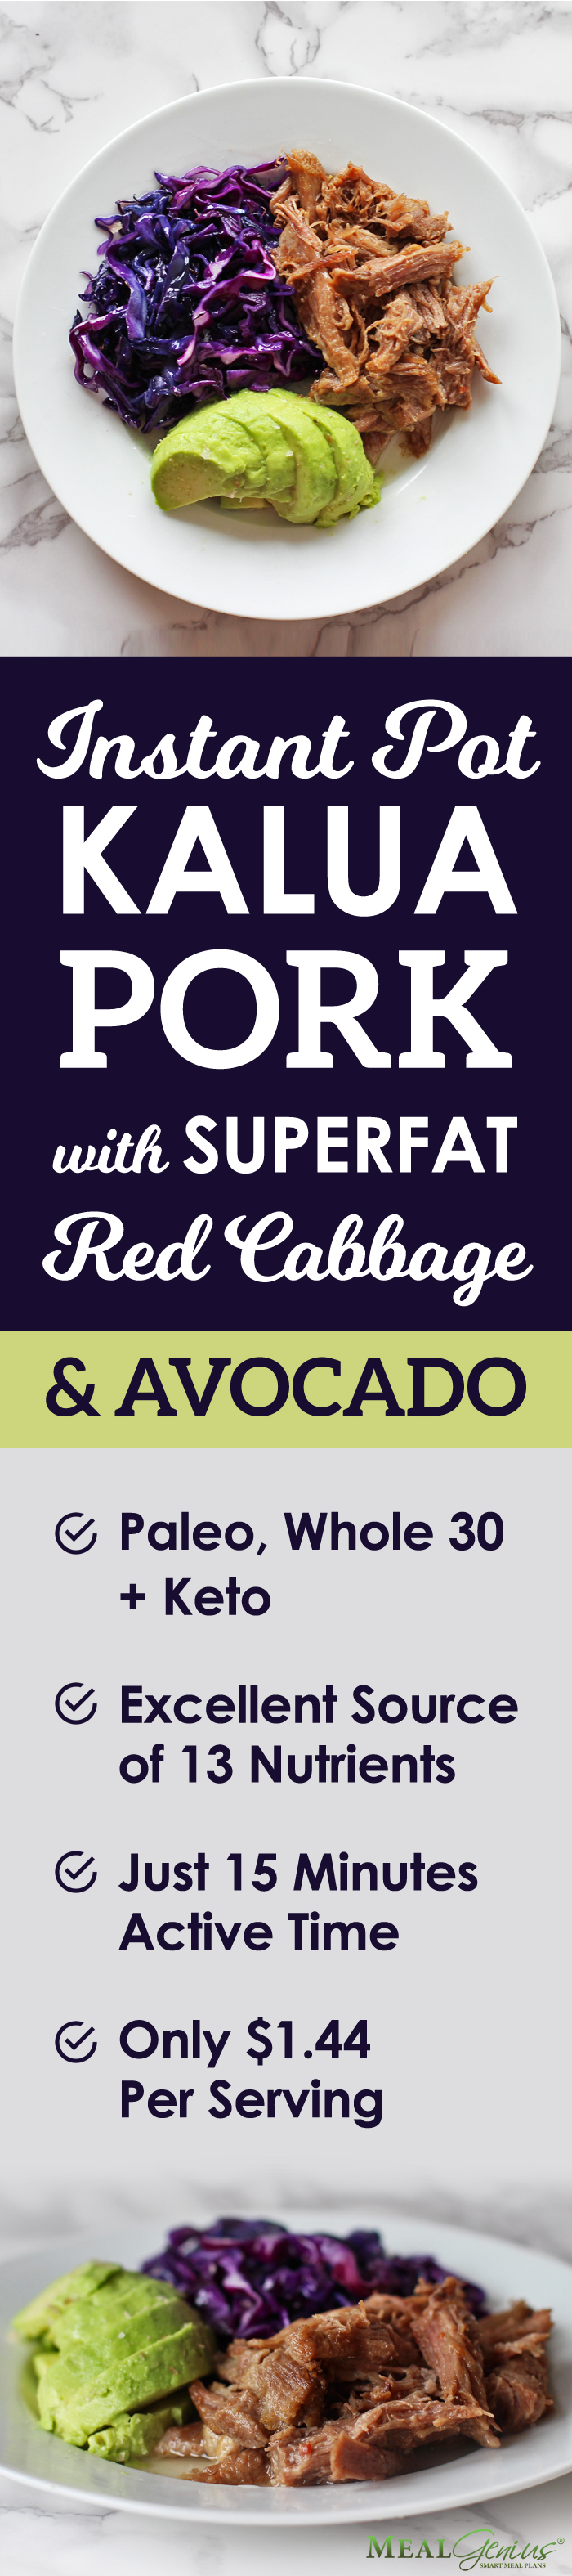 Instant Pot Kalua Pork Red Cabbage and Avocado - Meal Genius